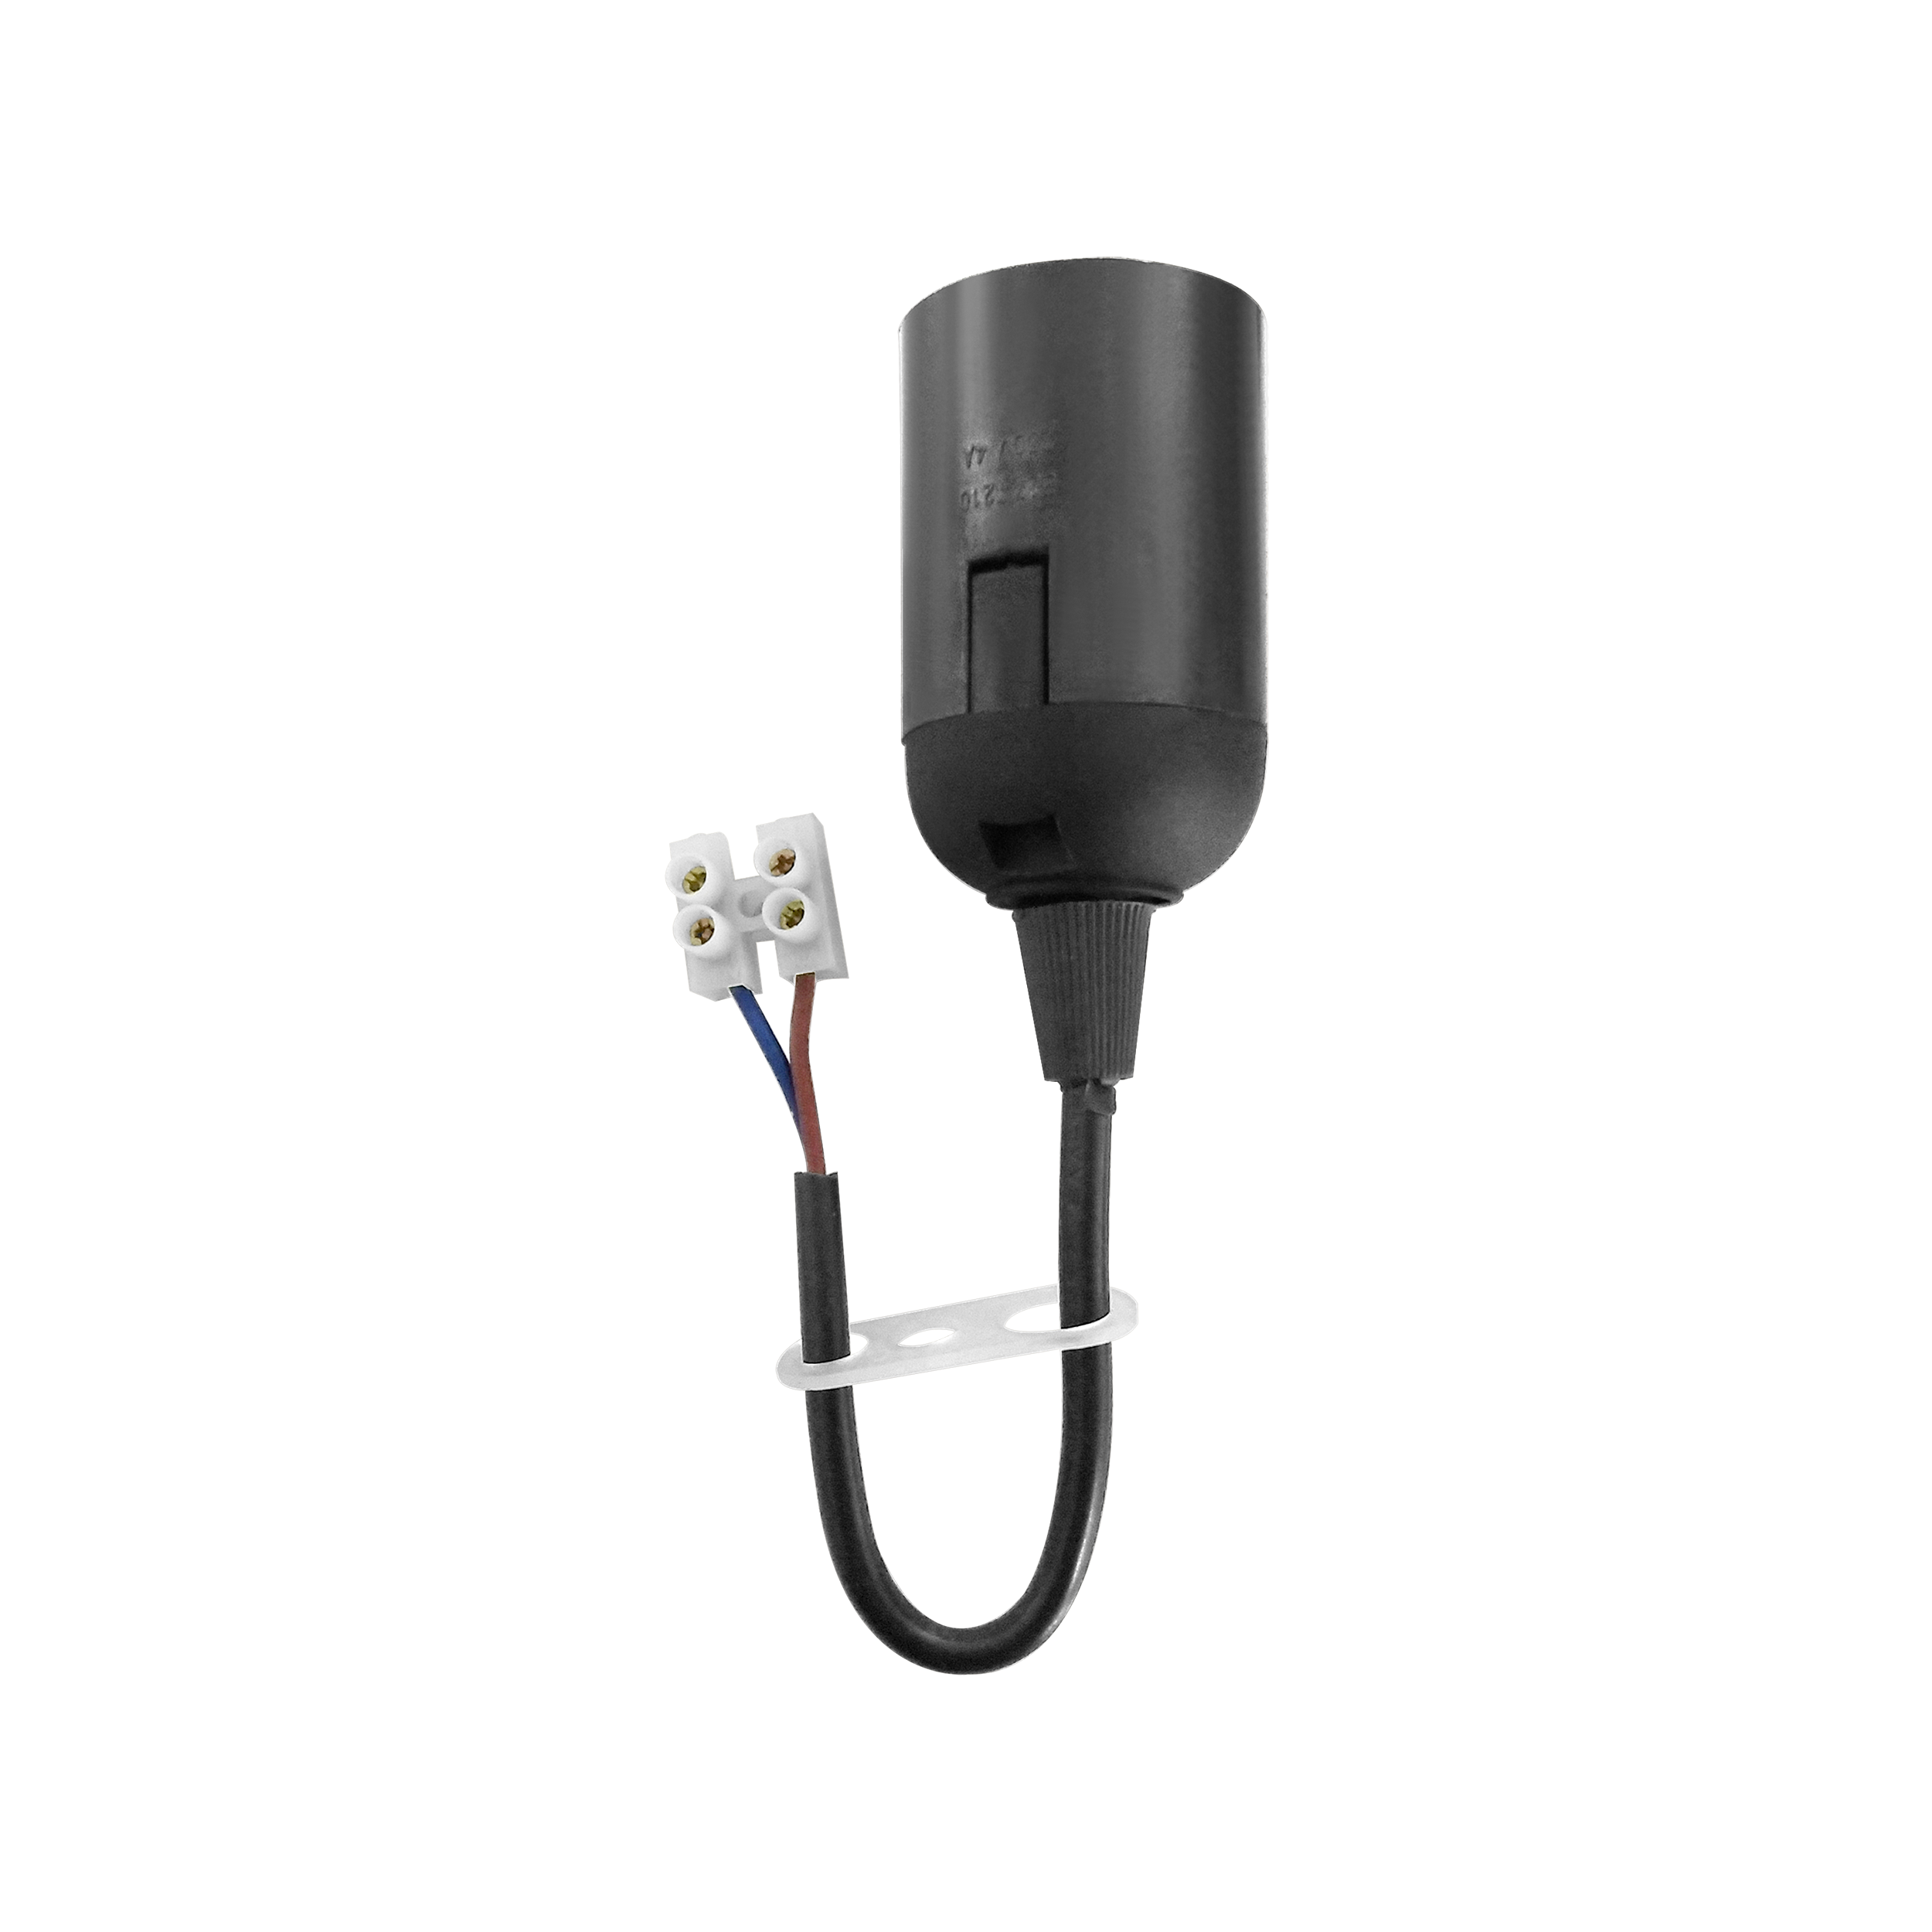 Imagem de download de PNG de suporte de lâmpada elétrica